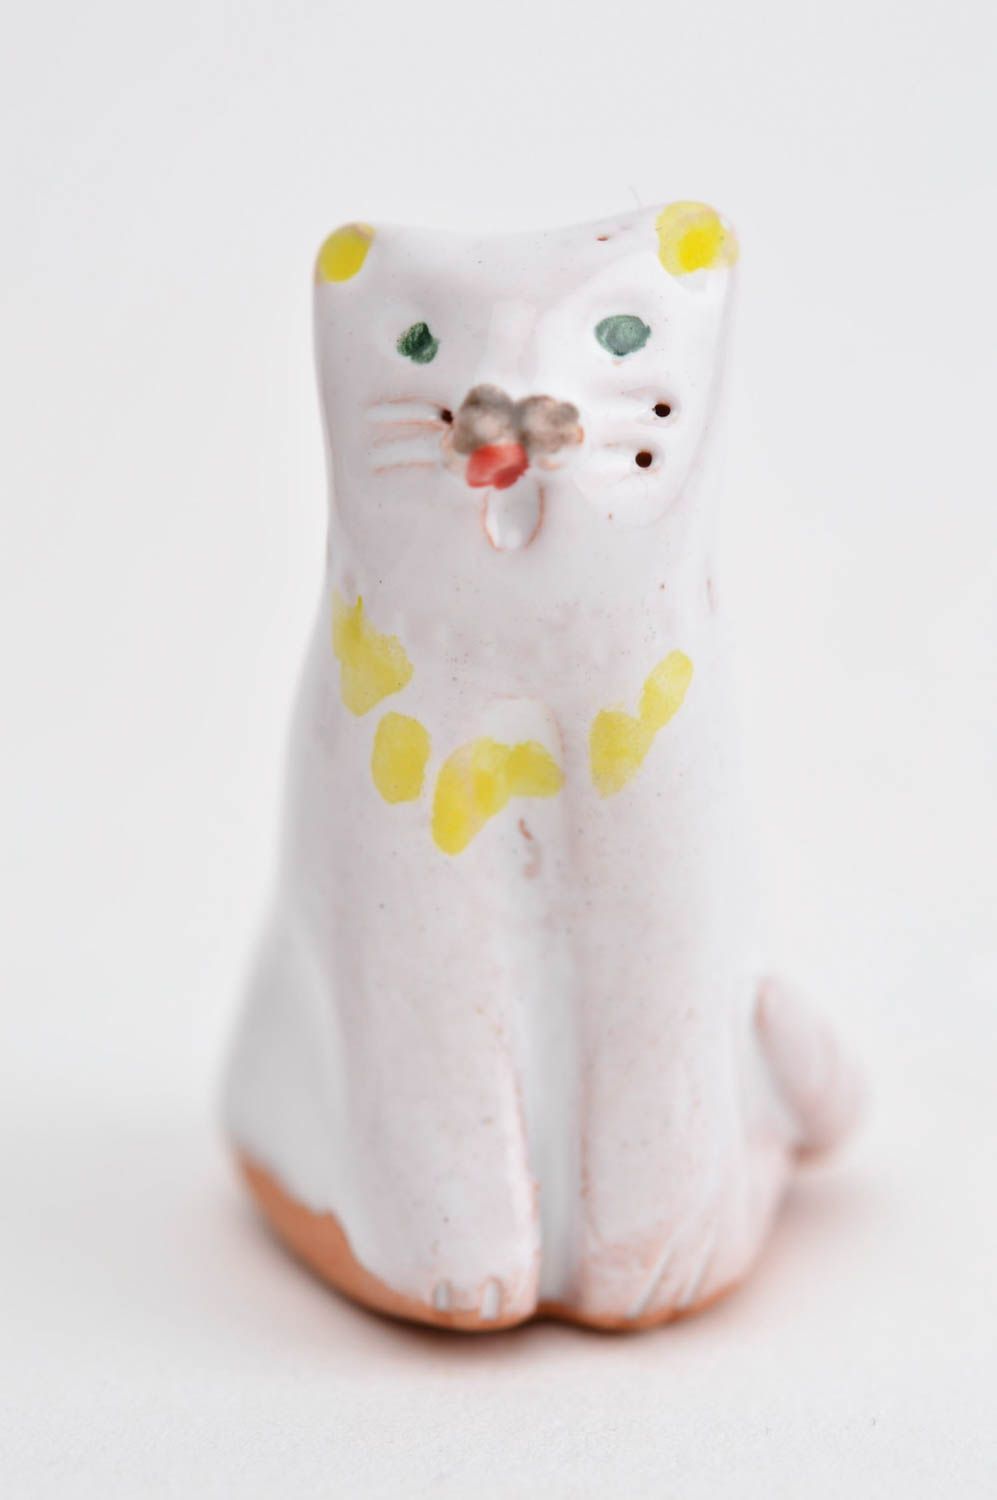 Handmade Keramik Deko Figur aus Ton Tier Statue Miniatur Figur weiße Katze schön foto 8